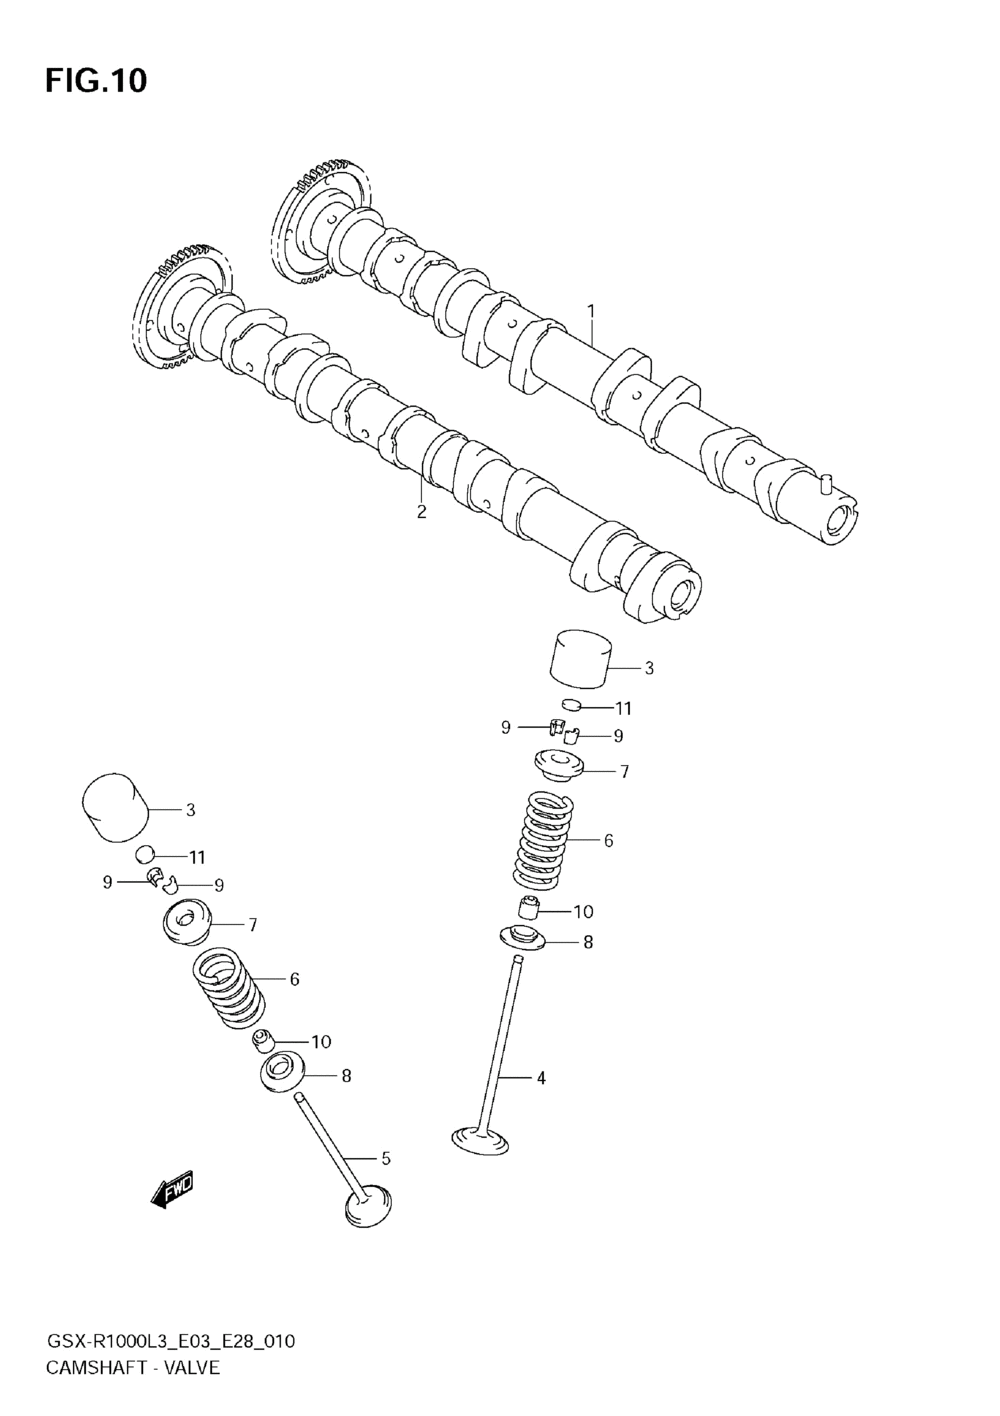 Camshaft - valve